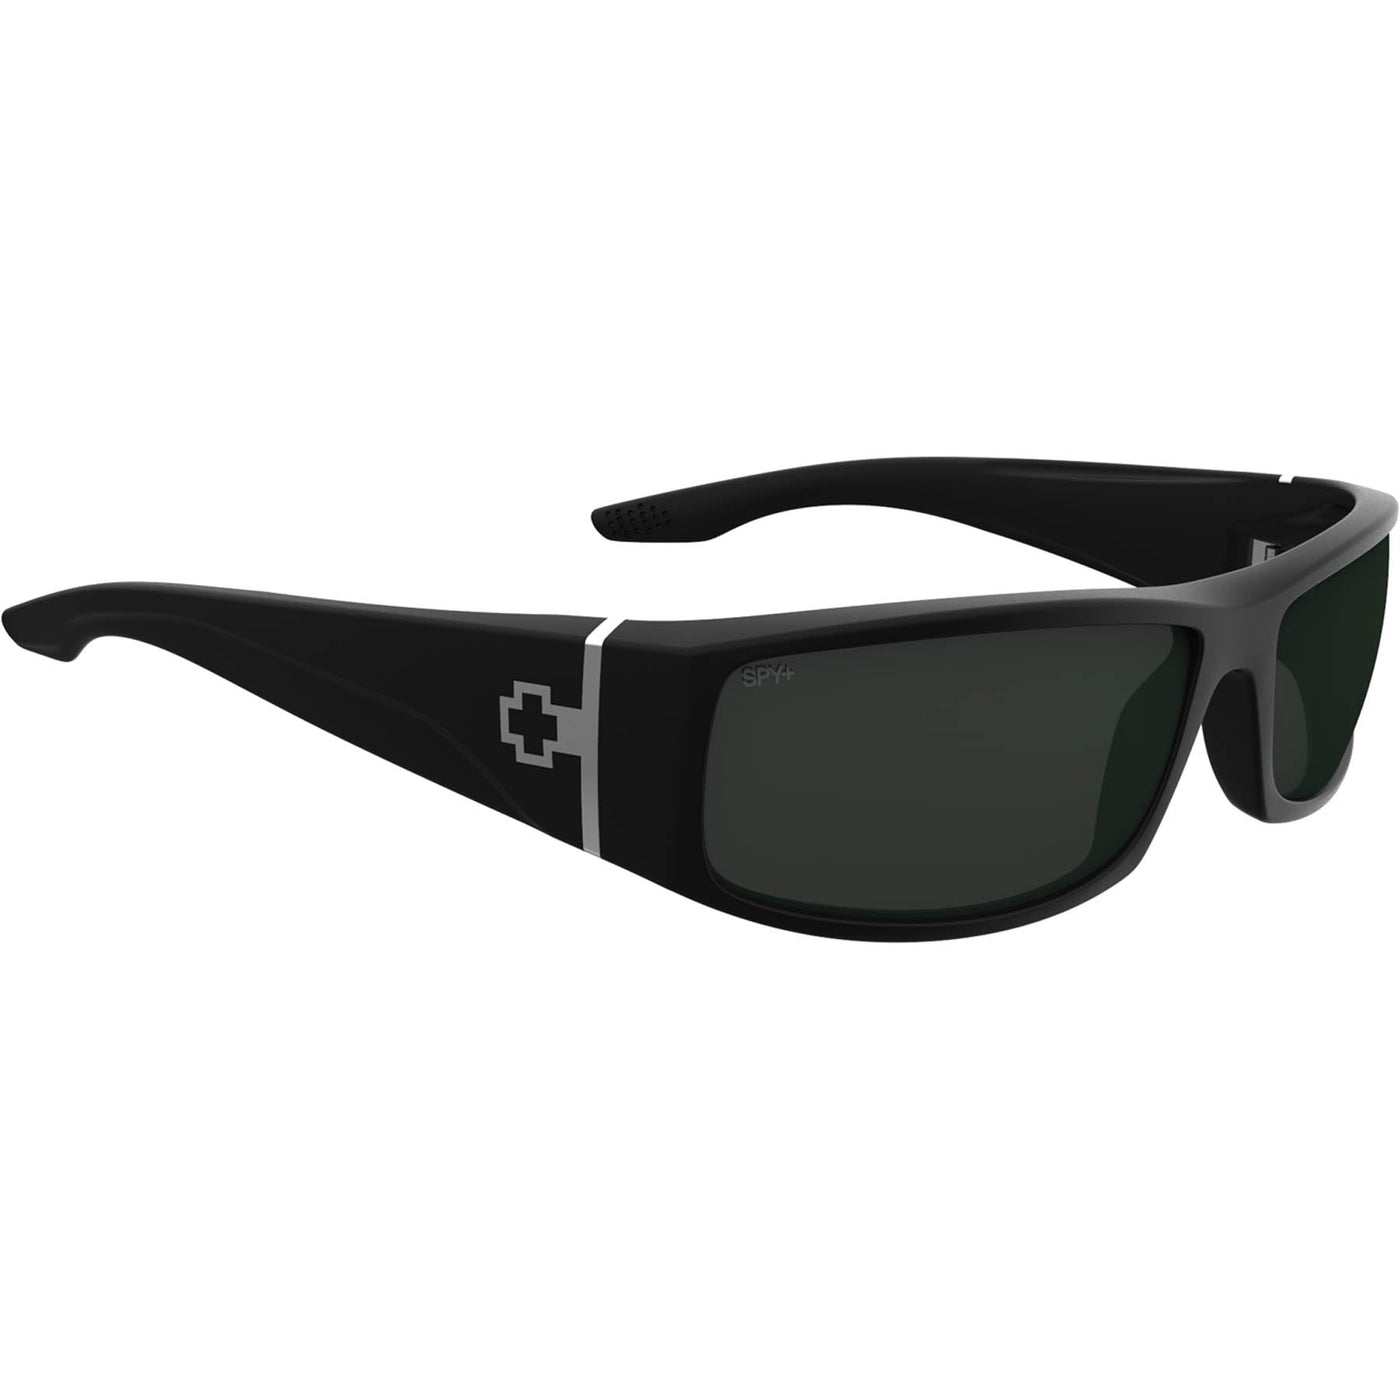 SPY COOPER XL Sunglasses, Happy Lens - Gray/Green Matte Black 8Lines Shop - Fast Shipping